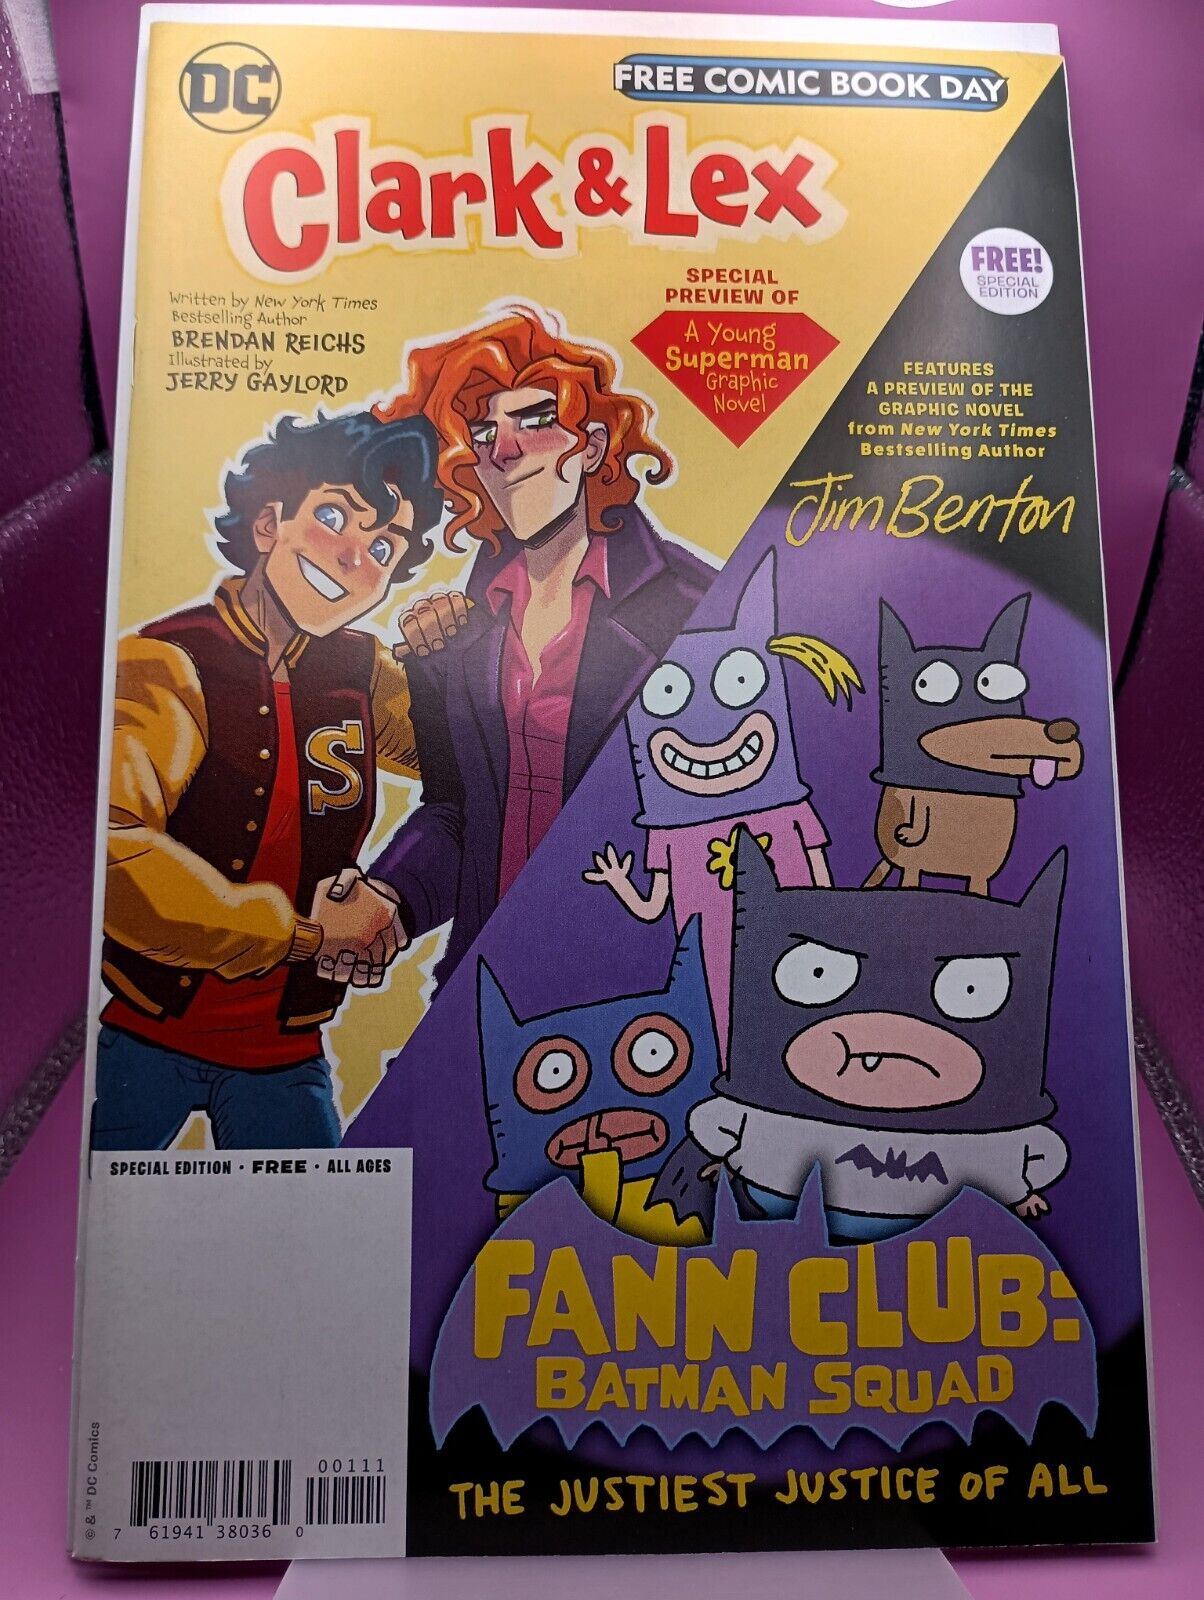 UNSTAMPED 2023 FCBD Clark & Lex Promotional Giveaway Comic Book 